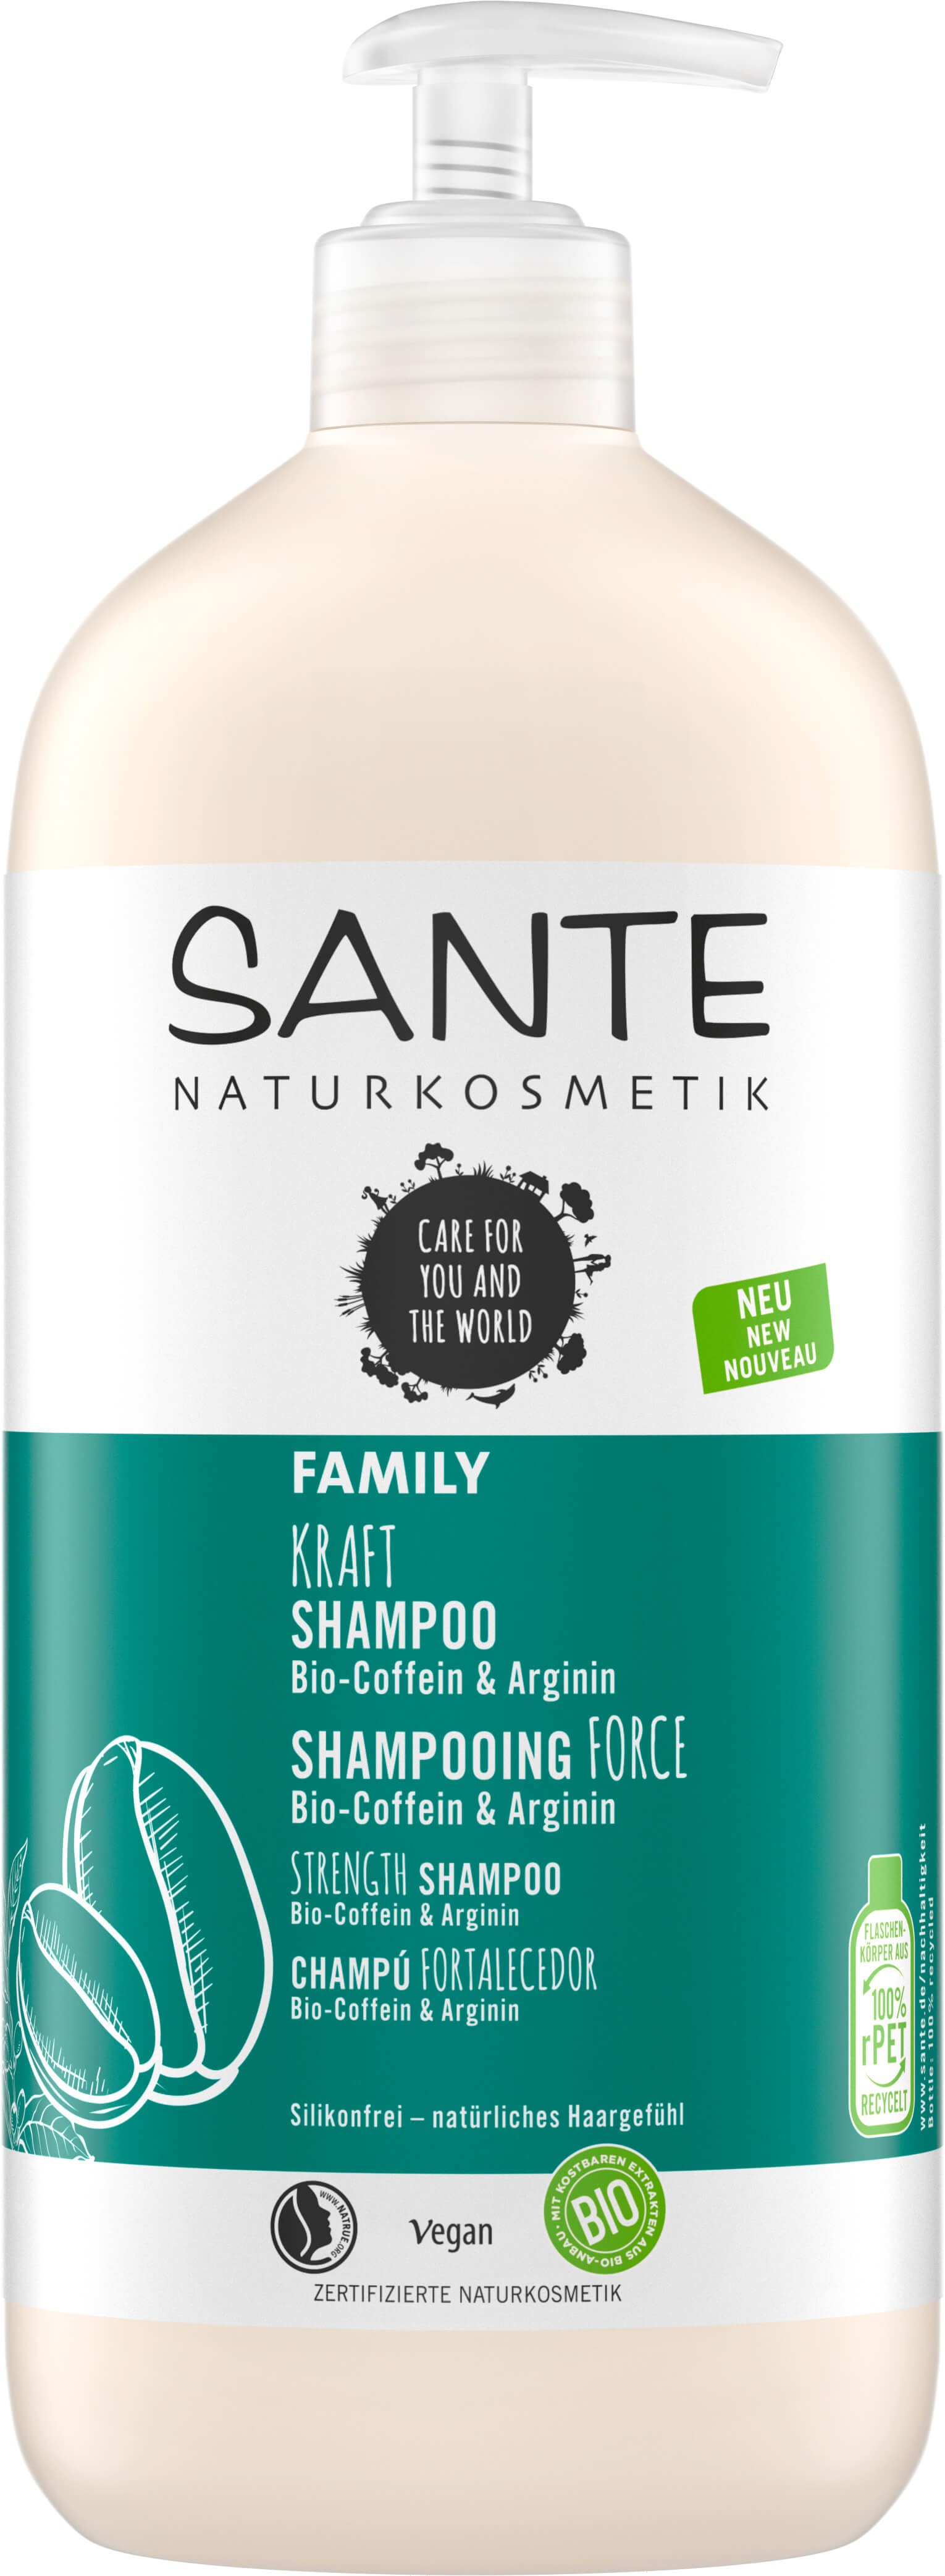 Kraft Bio-Coffein Arginin | Naturkosmetik & Shampoo SANTE